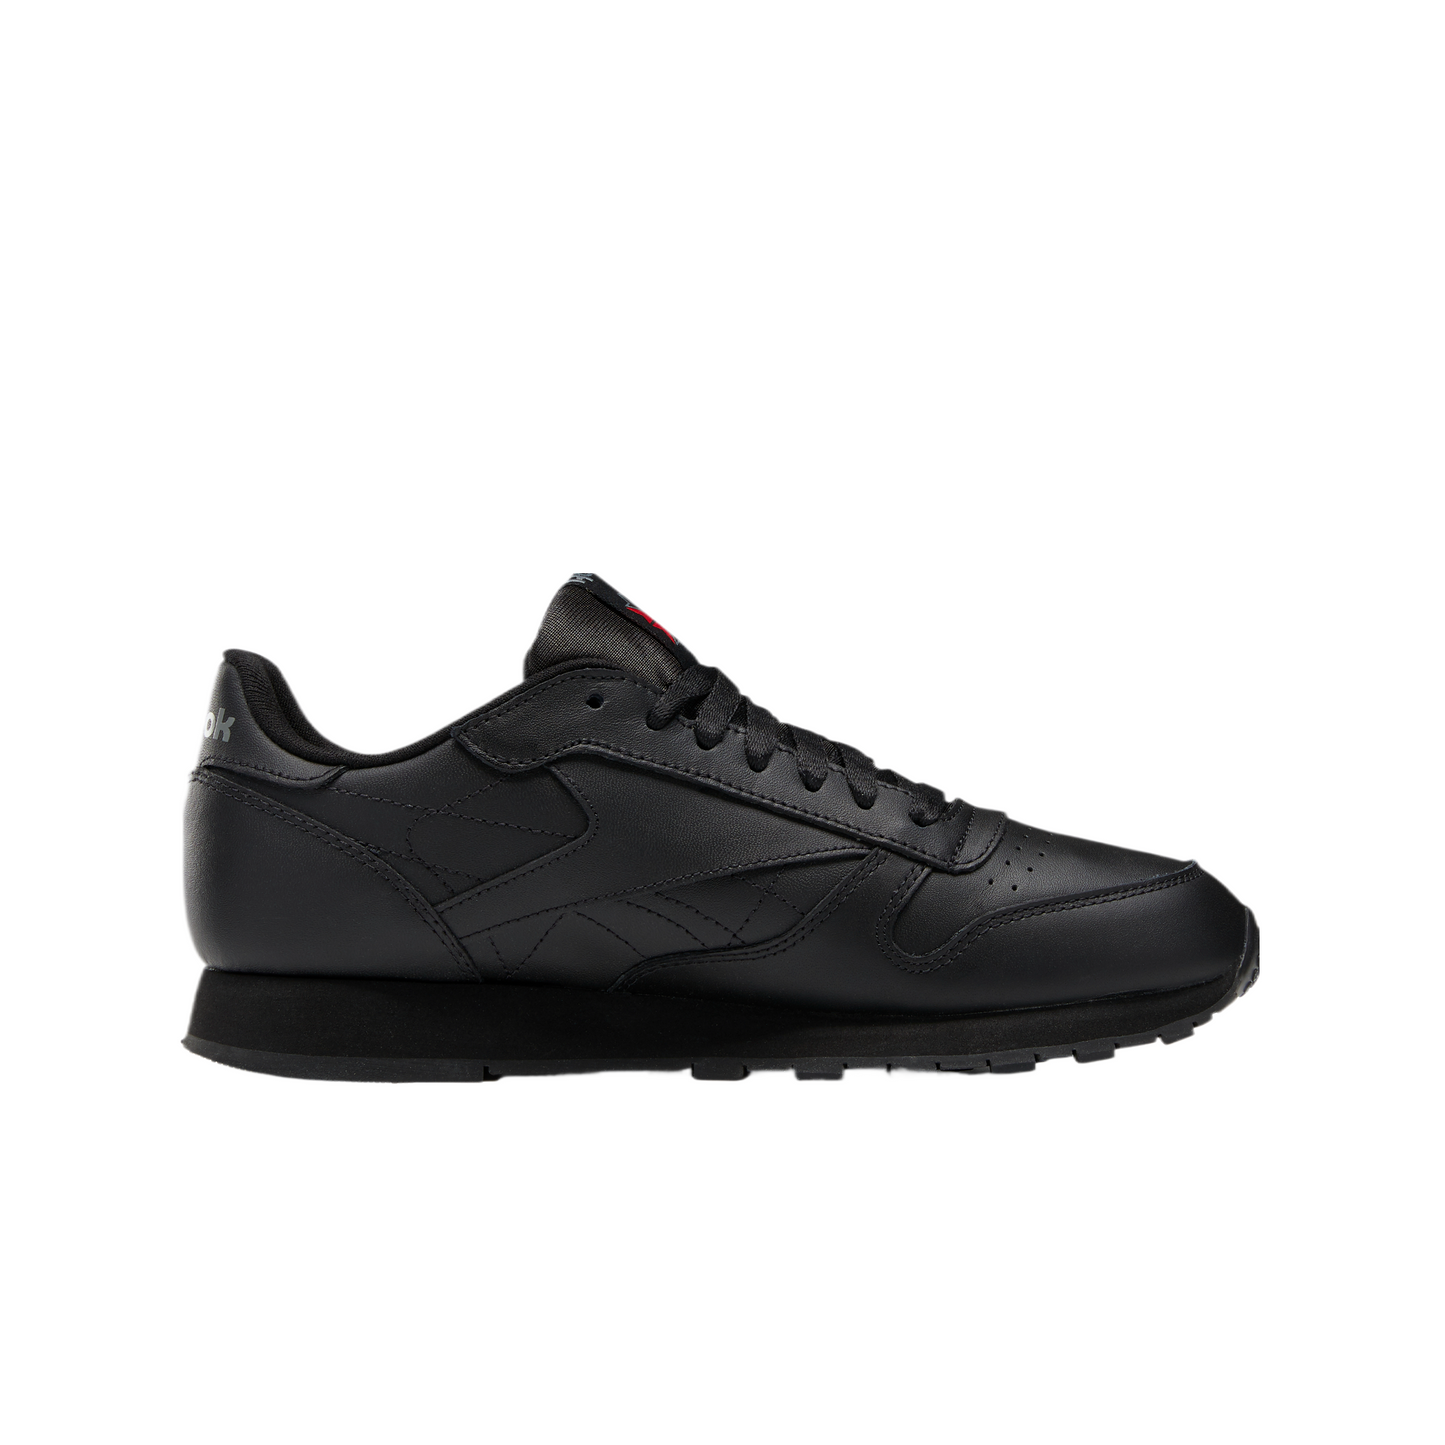 Reebok Adult Unisex Classic Leather Running Shoe Black/Black/Purgy5 116/GY0955